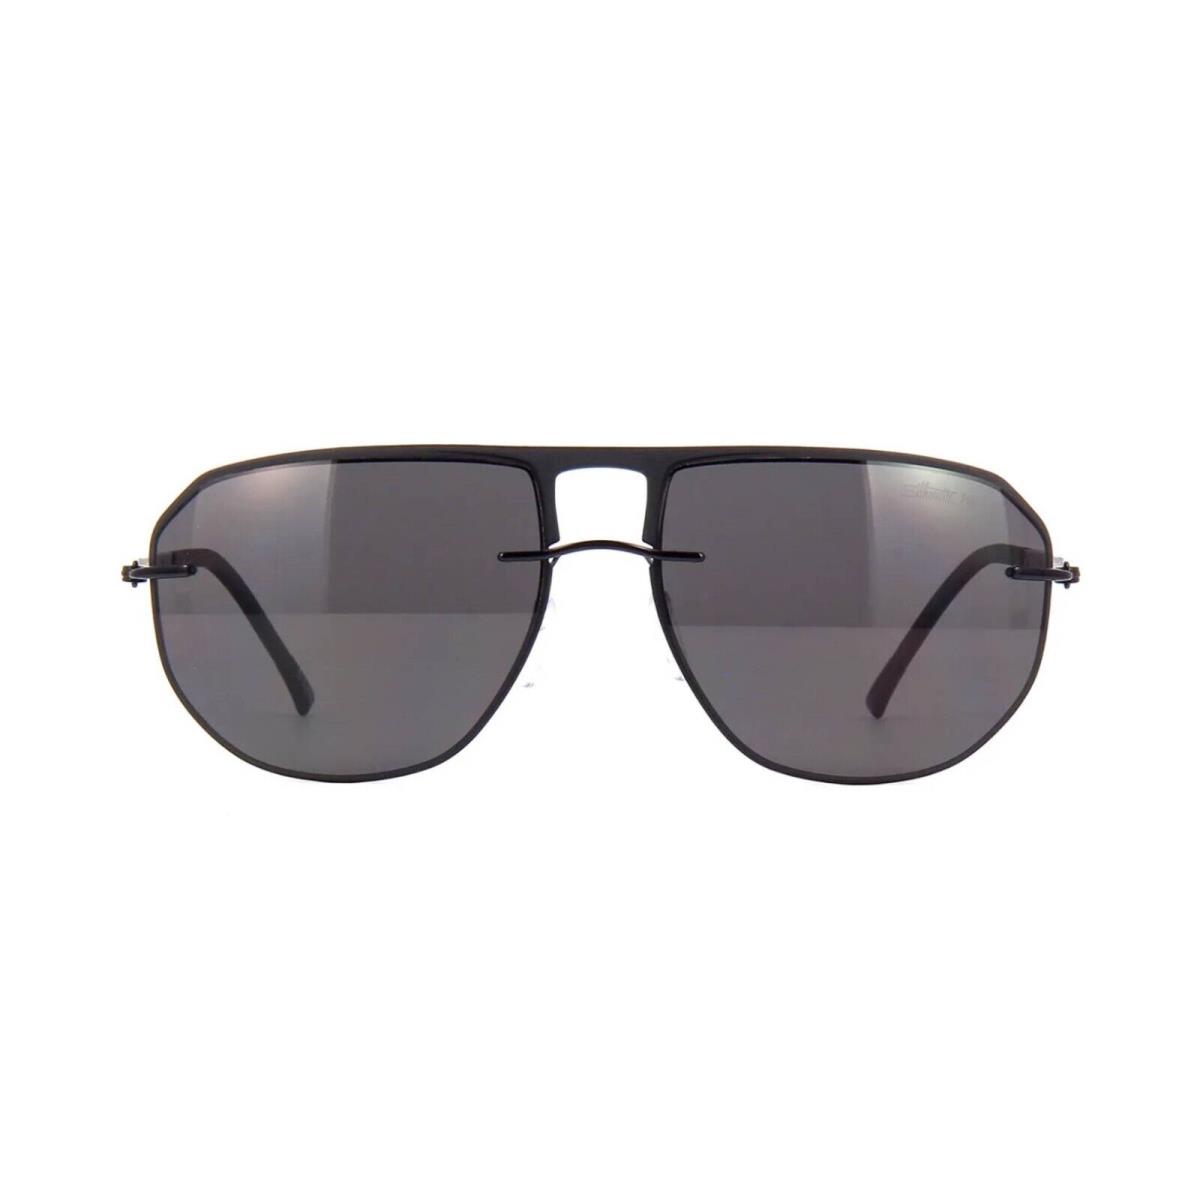 Silhouette Accent Shades 8704 Black/dark Grey Polarized 9140 Sunglasses - Frame: Black, Lens: Dark Grey Polarized